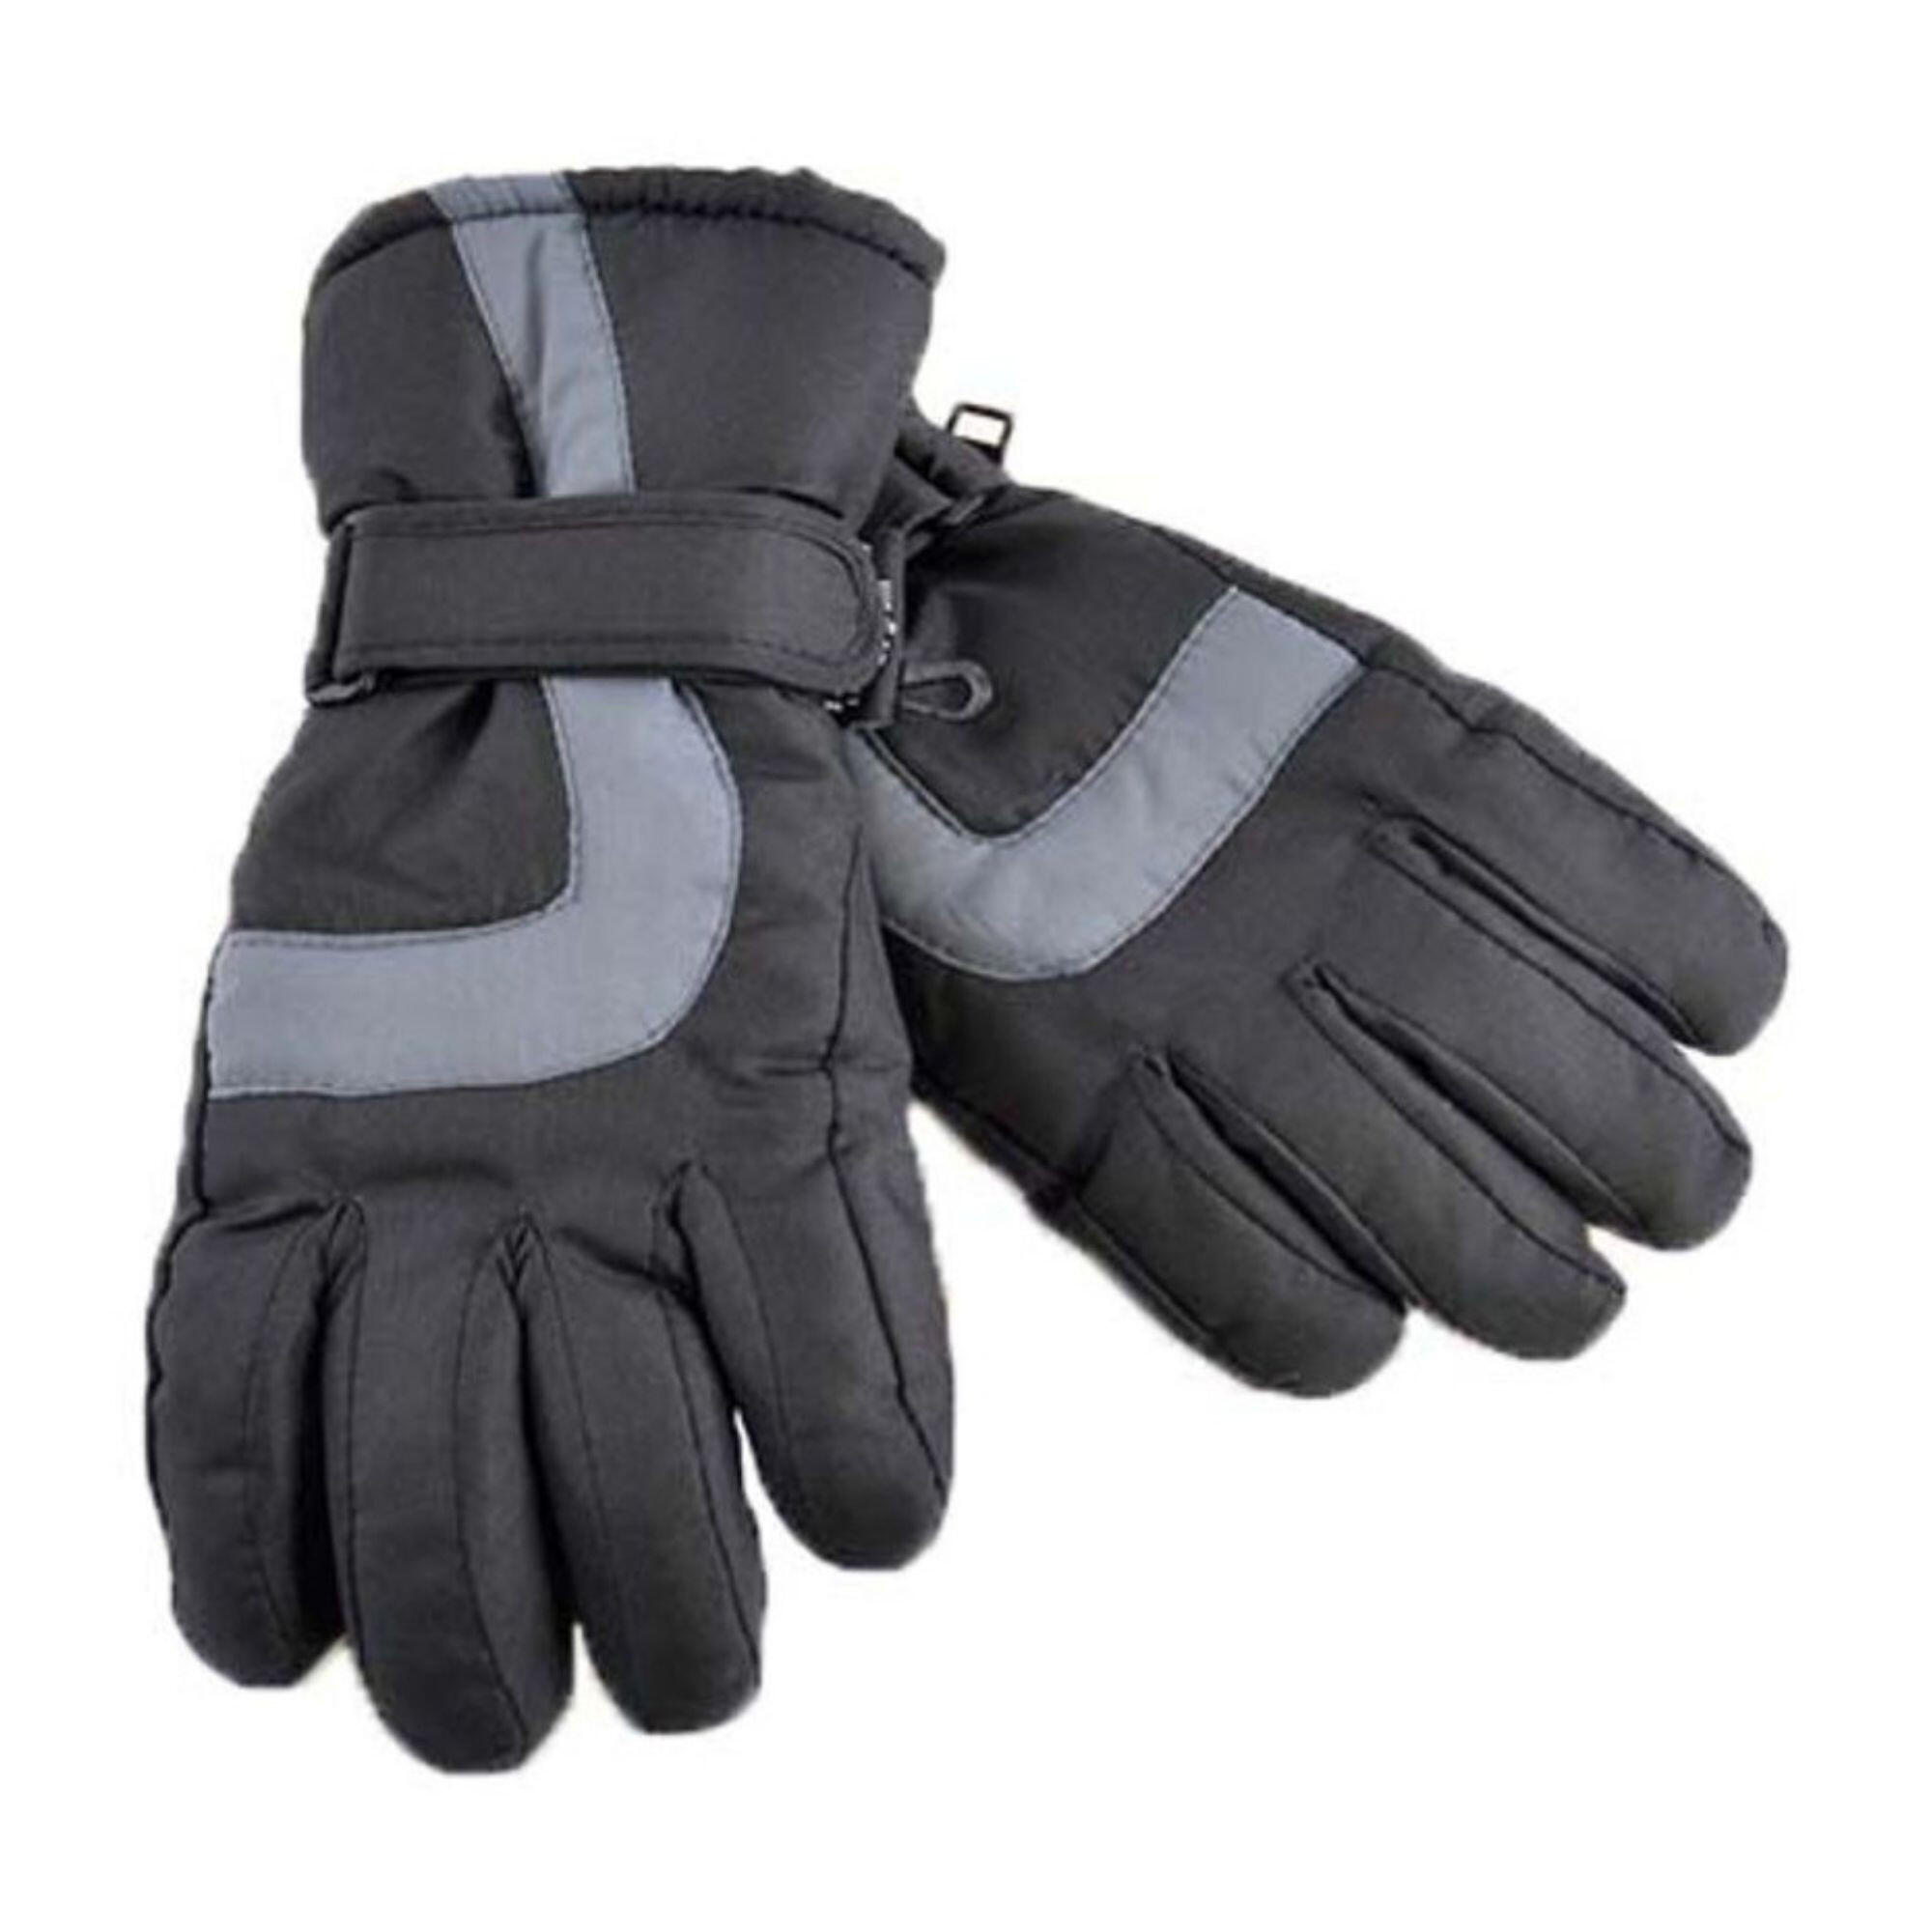 Childrens Waterproof Winter Warm Thermal Ski Gloves 1/3